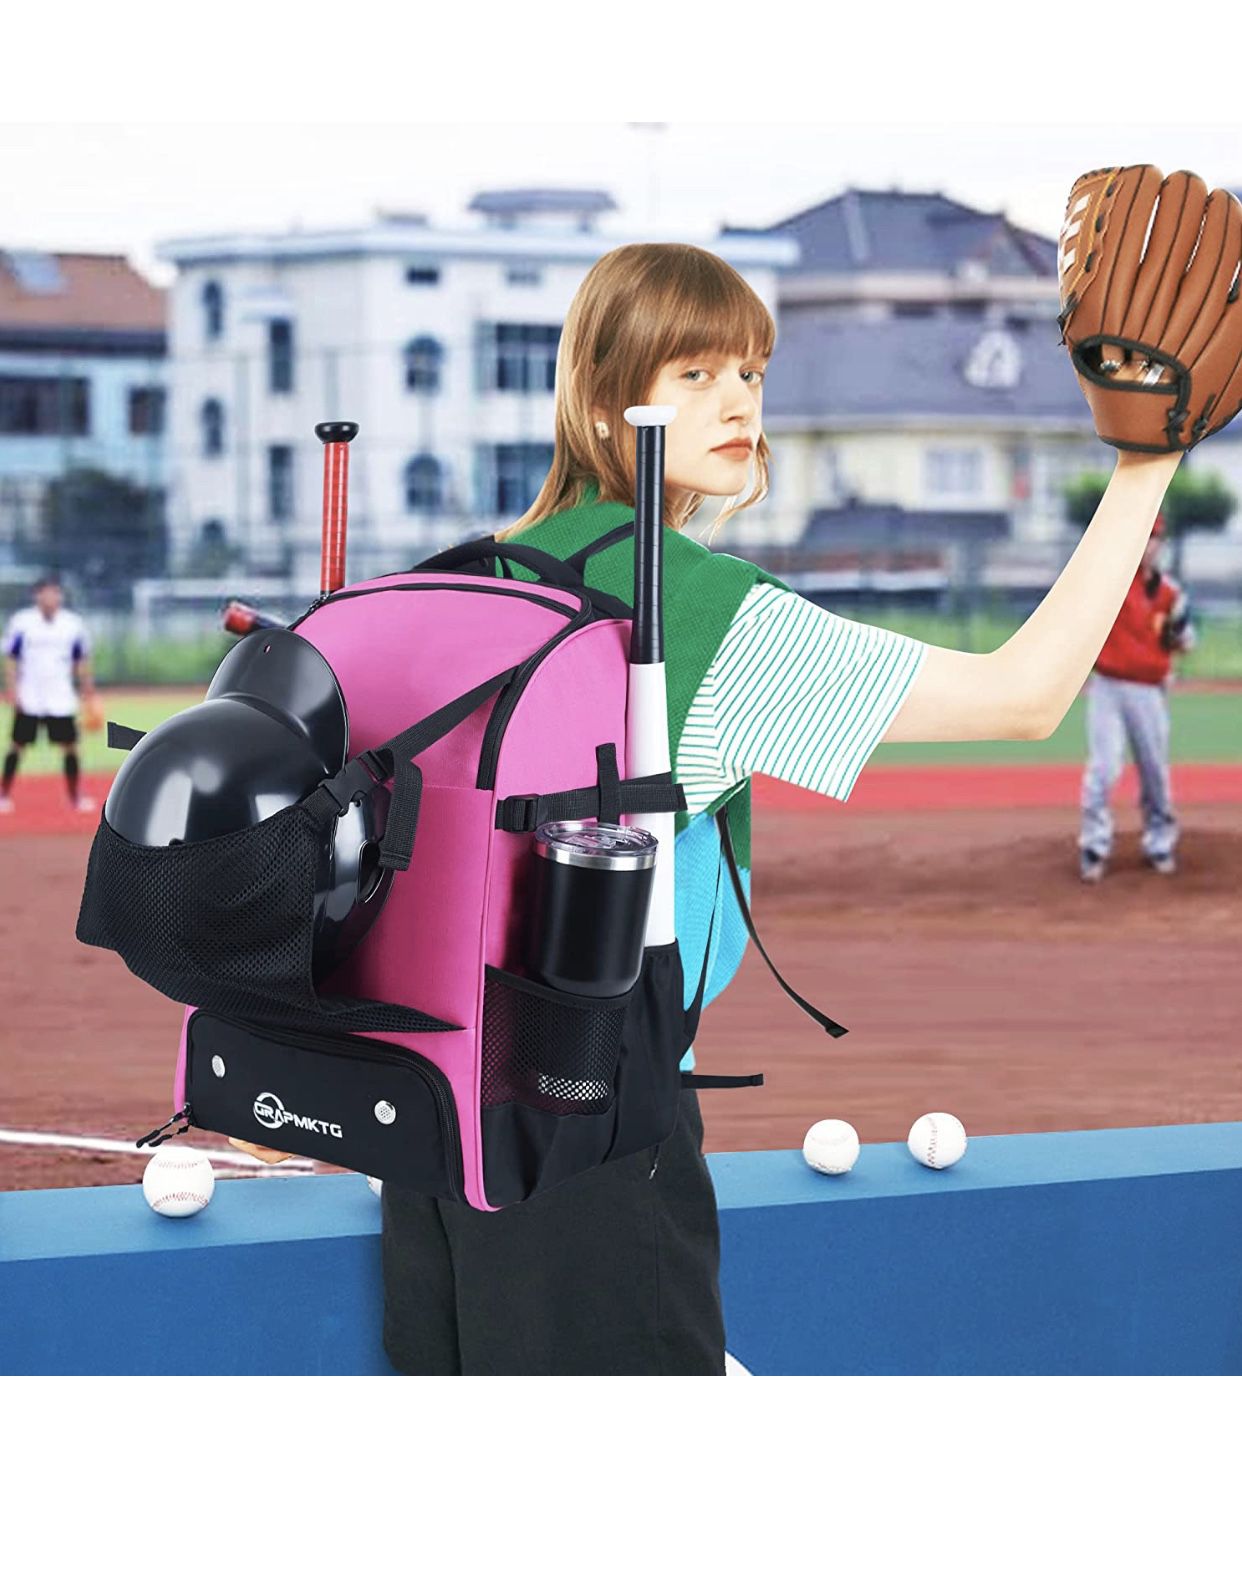 Baseball Softball Bag X-Large Soccer Bag for Youth Boys Girls and Men Women Basketball Backpack for Adult Kid